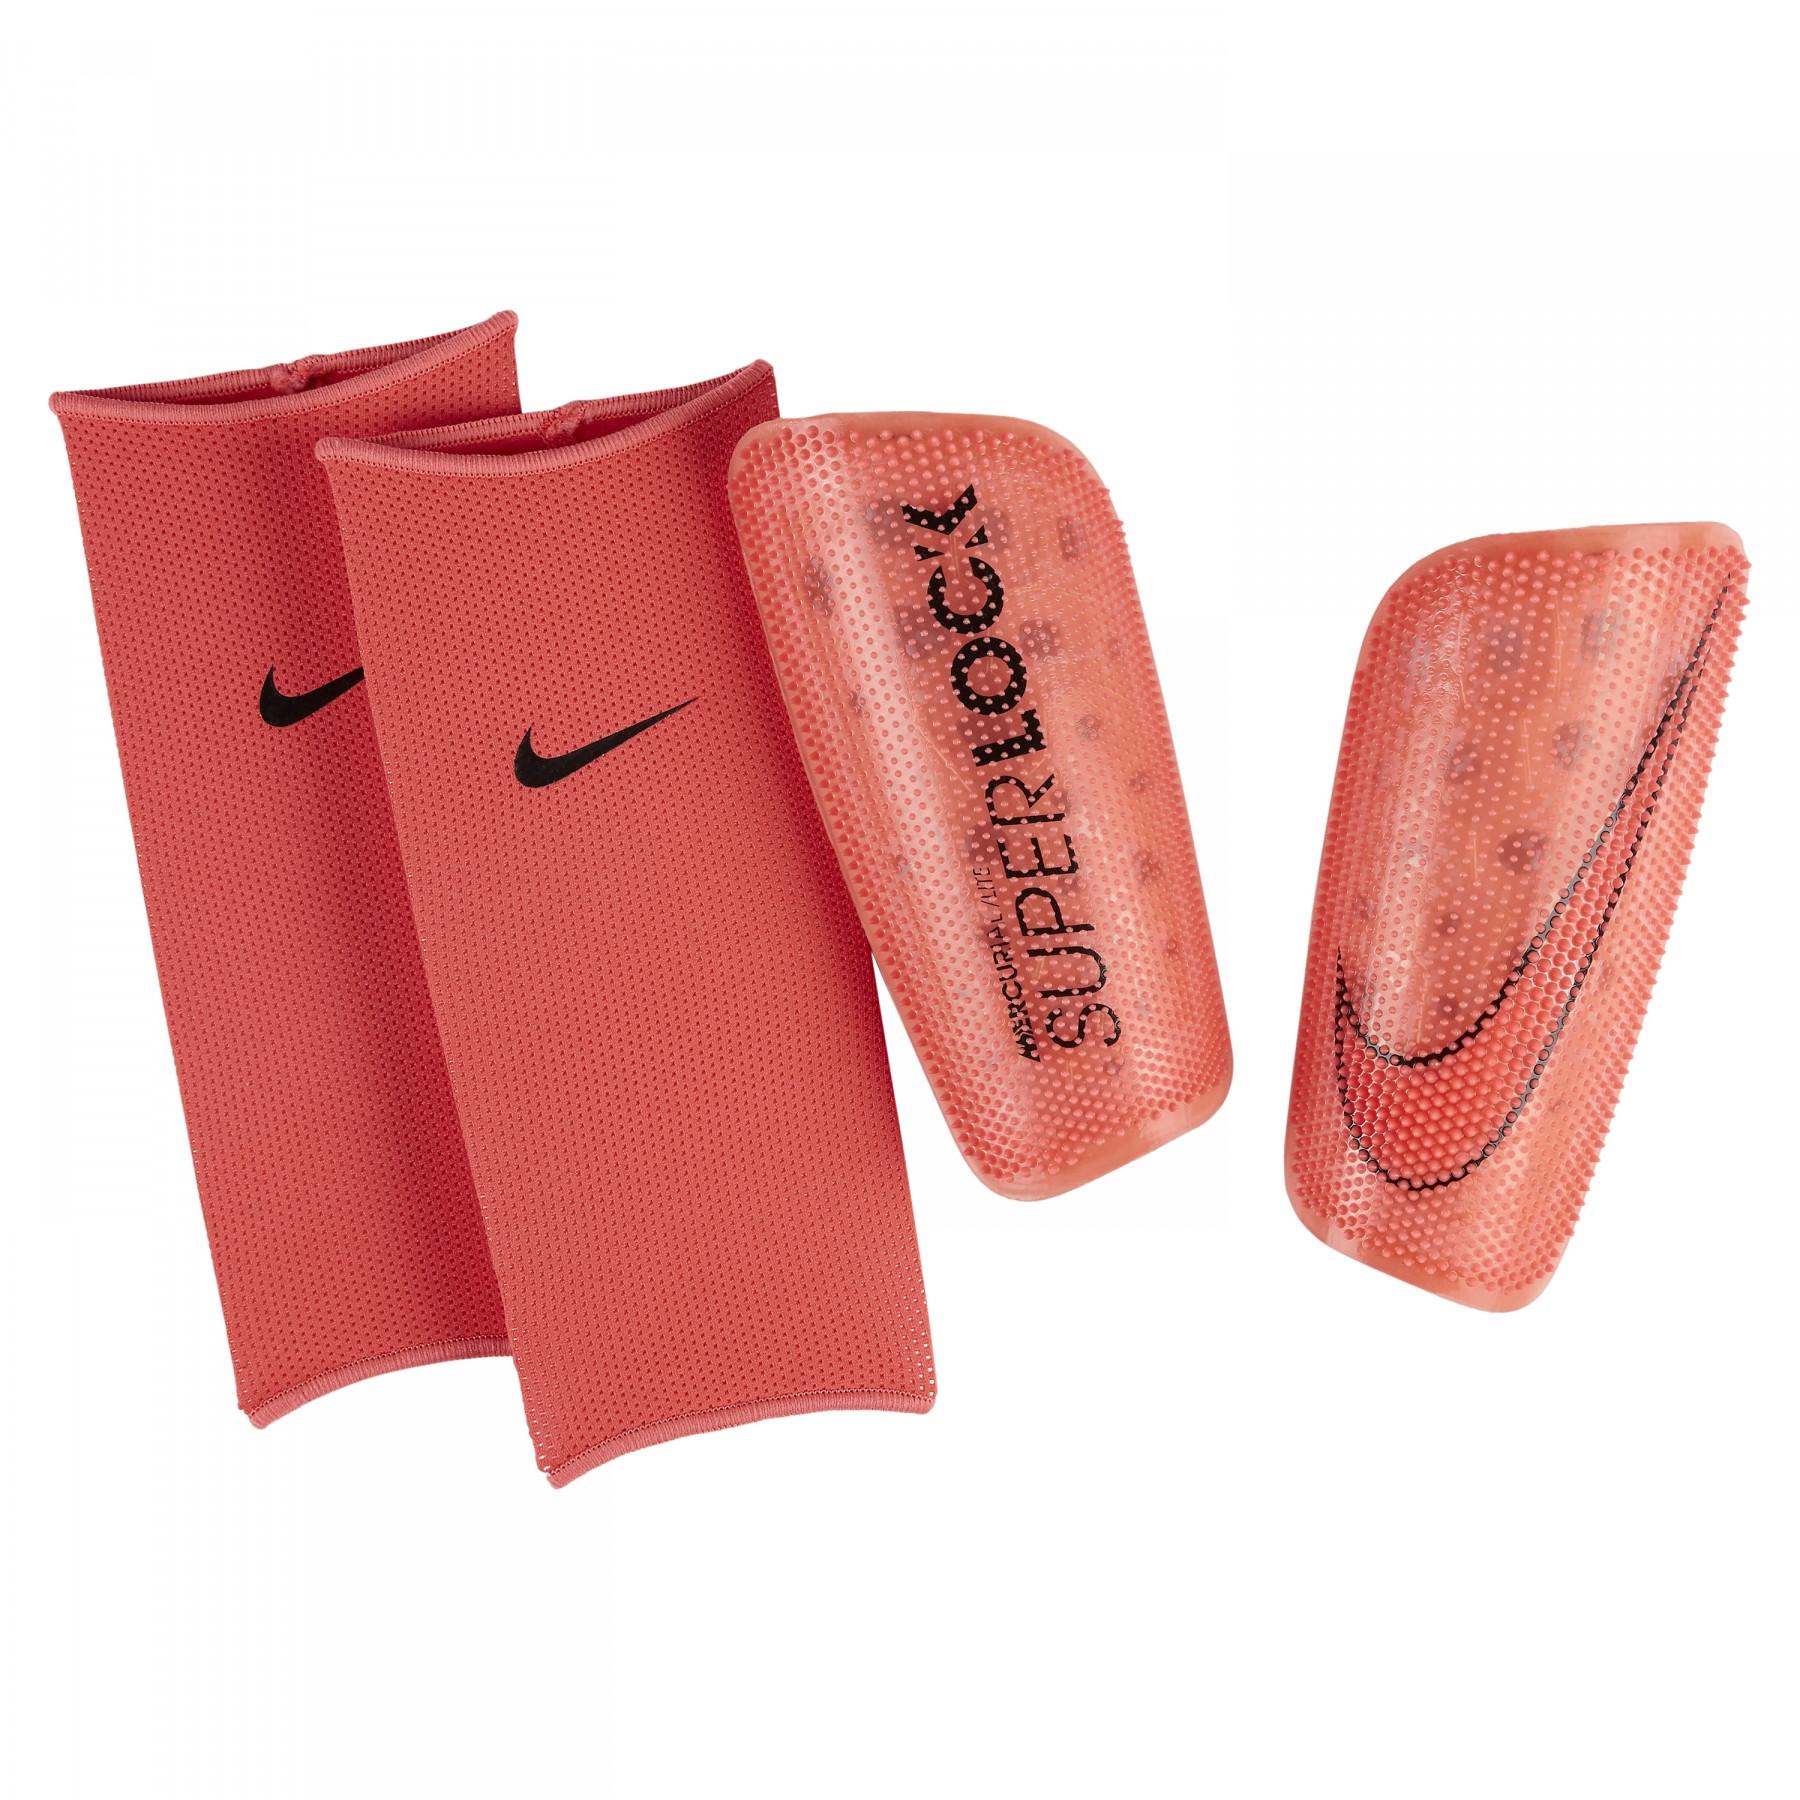 Ochraniacze goleni Nike Mercurial Lite Superlock